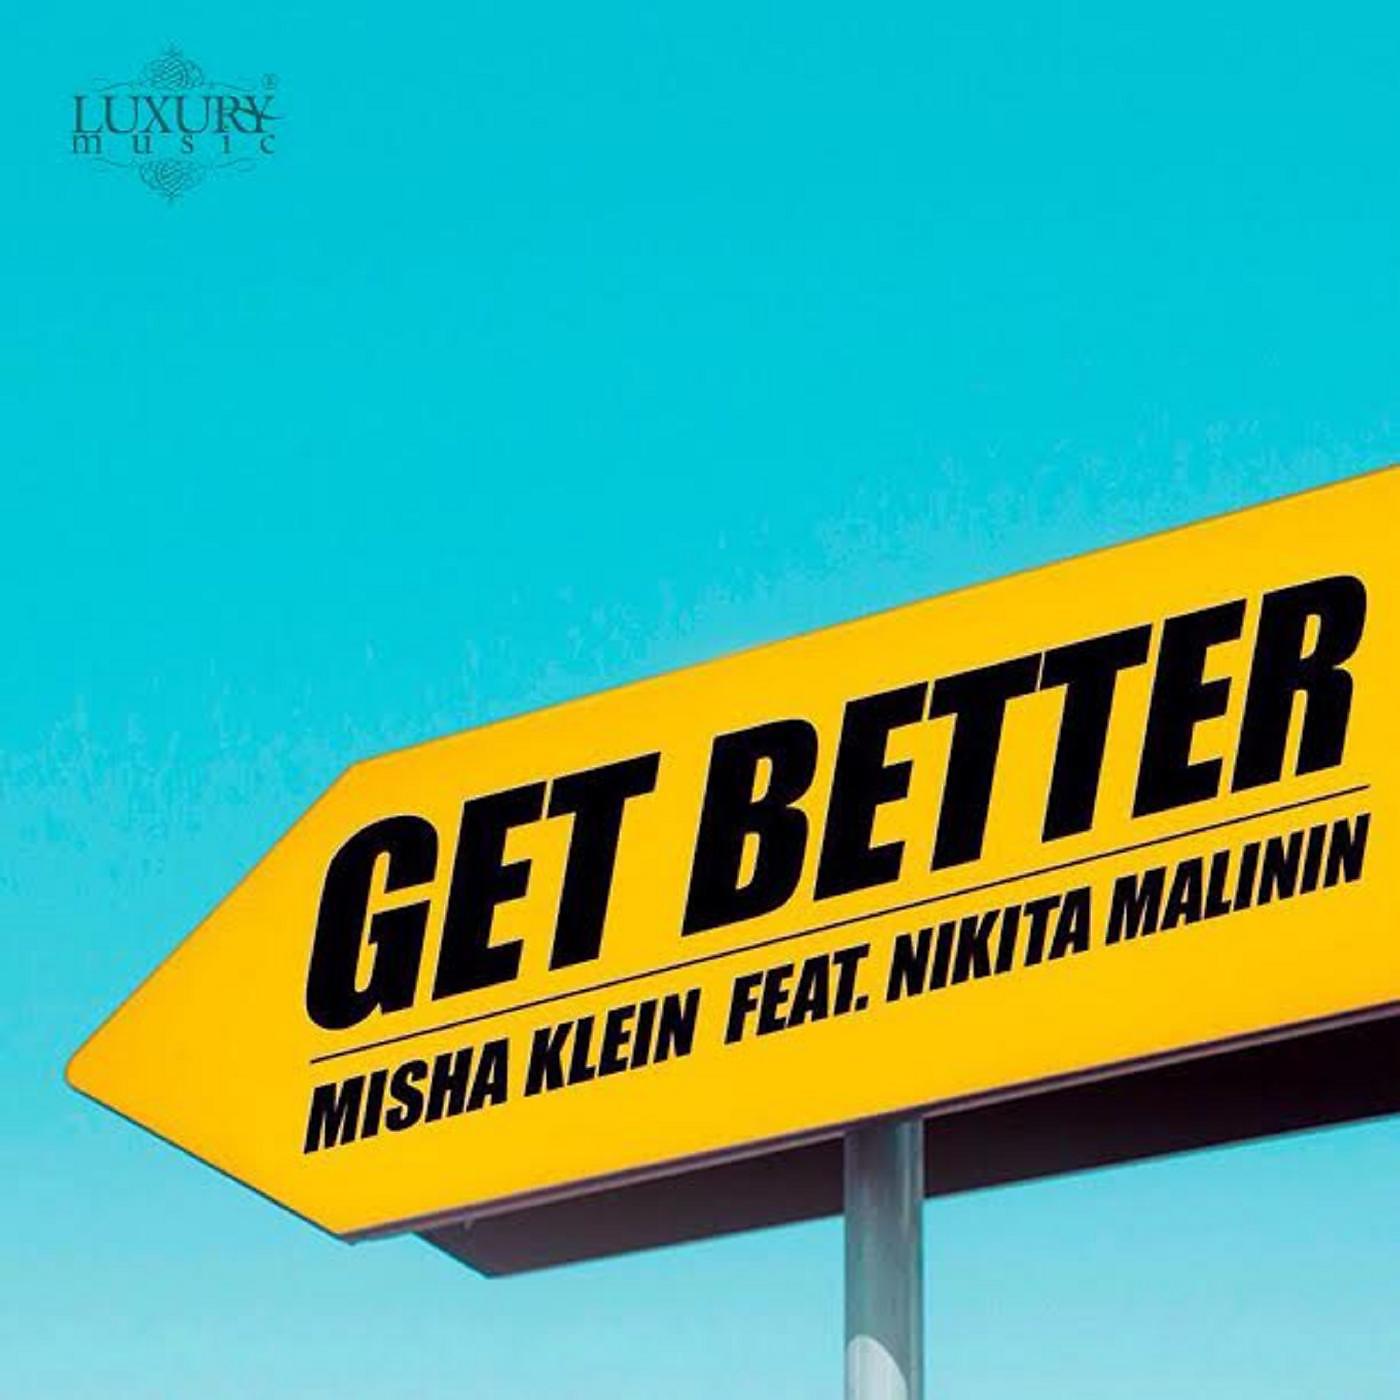 Better feat. Misha Klein feat. Nikita Malinin - get better. Misha Klein & Nikita Malinin - give me your hand (Original Mix). Миша Кляйн и Никита Малинин. Никита Малинин и Миша Клейн.